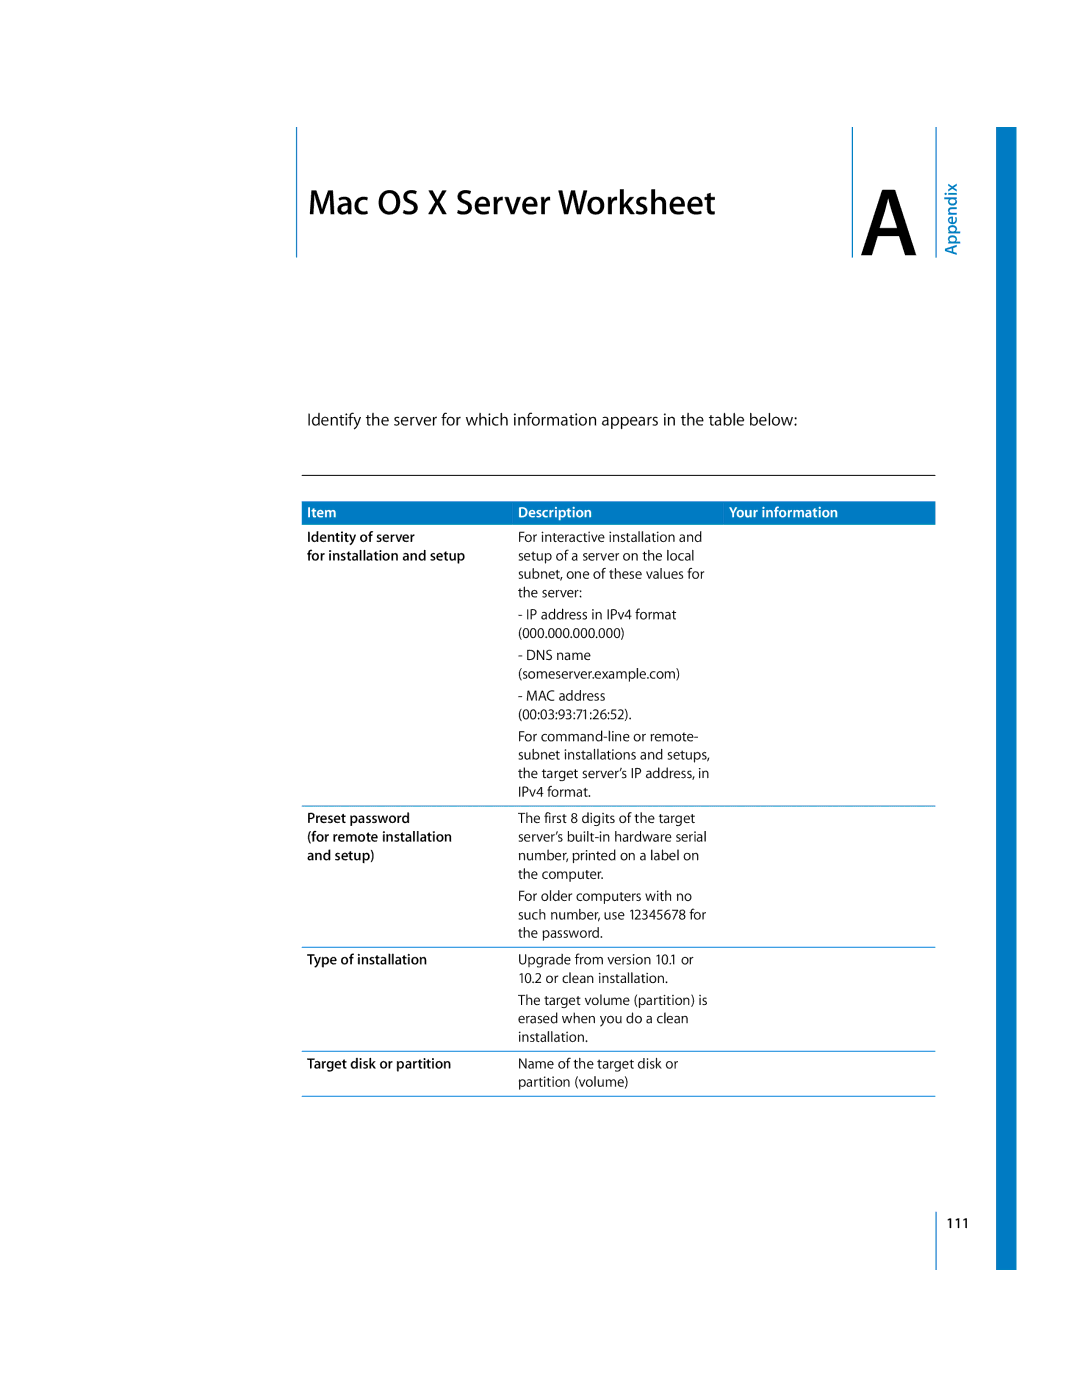 Apple 10.3 manual Mac OS X Server Worksheet, Appendix 